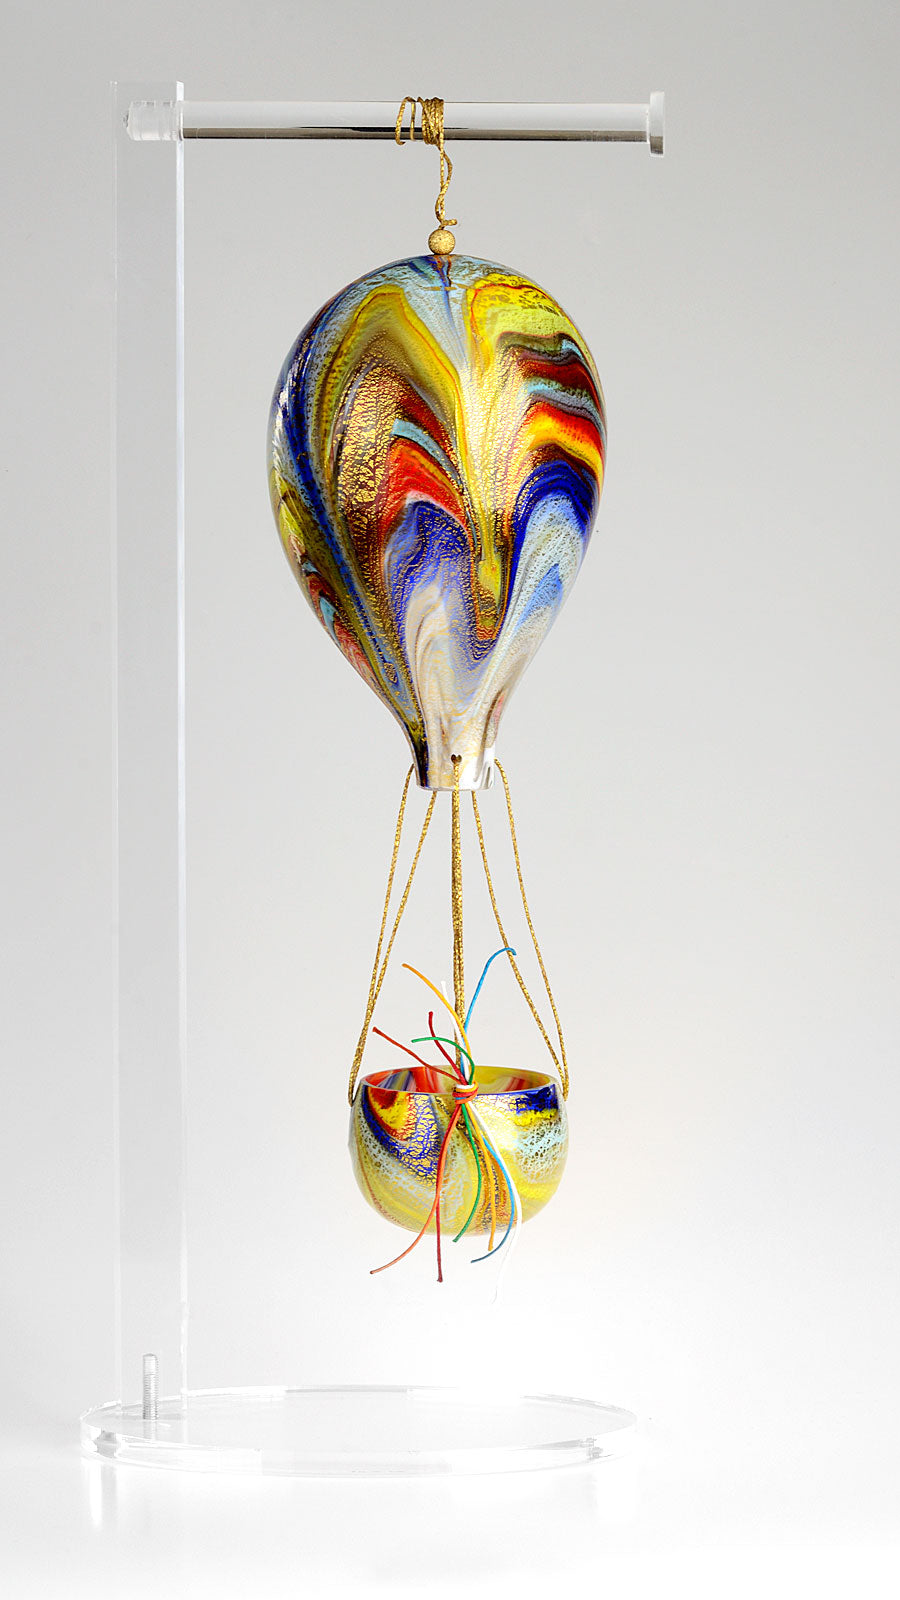 Murano glass hot air balloon